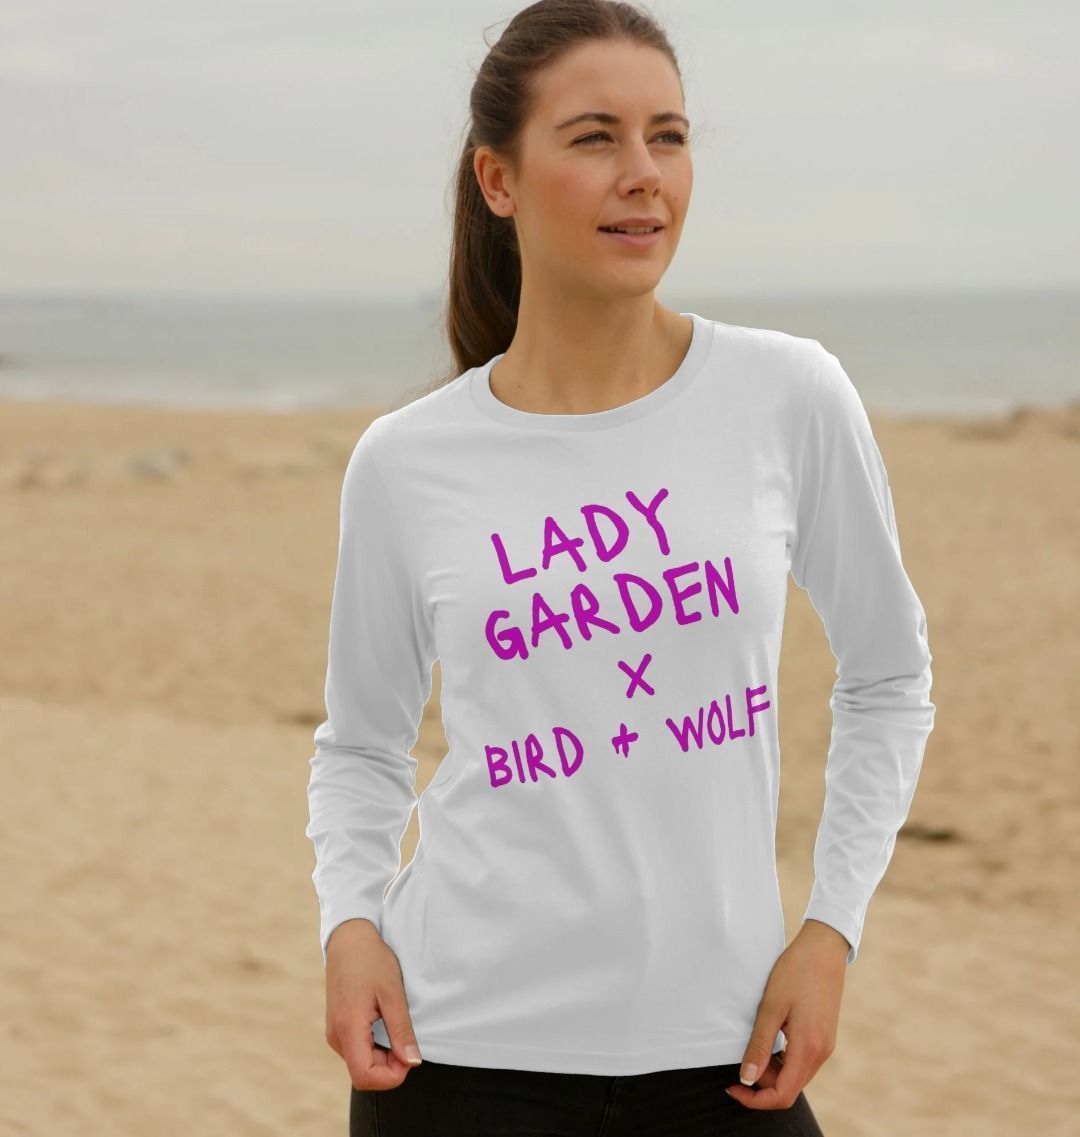 Lady Garden X Bird + Wolf Long Sleeve Tee (Pink Lettering)